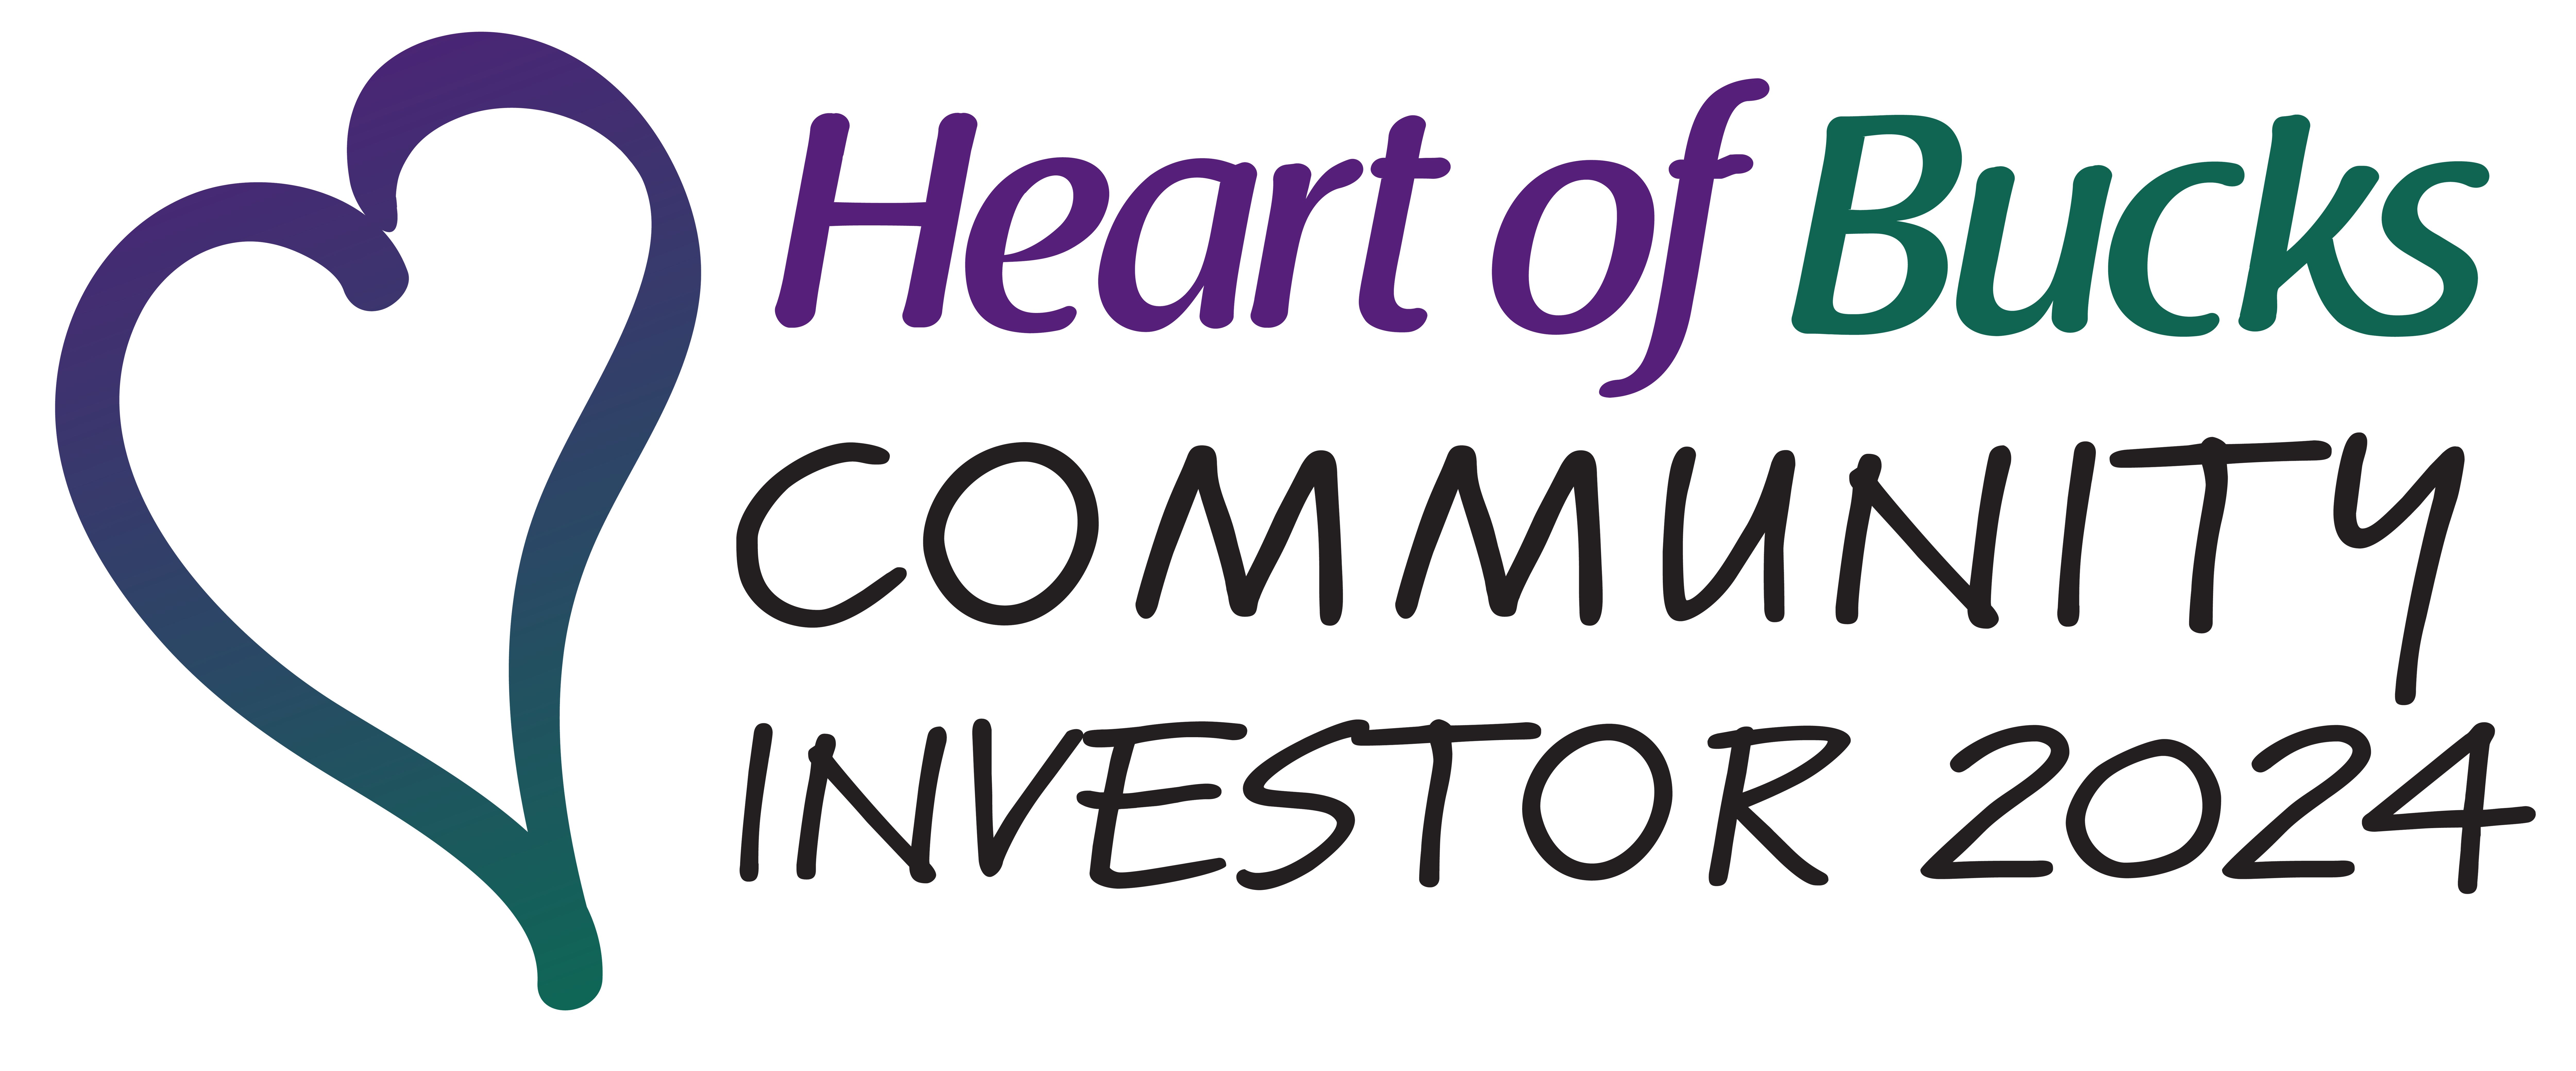 Hearts of Bucks Community Investor